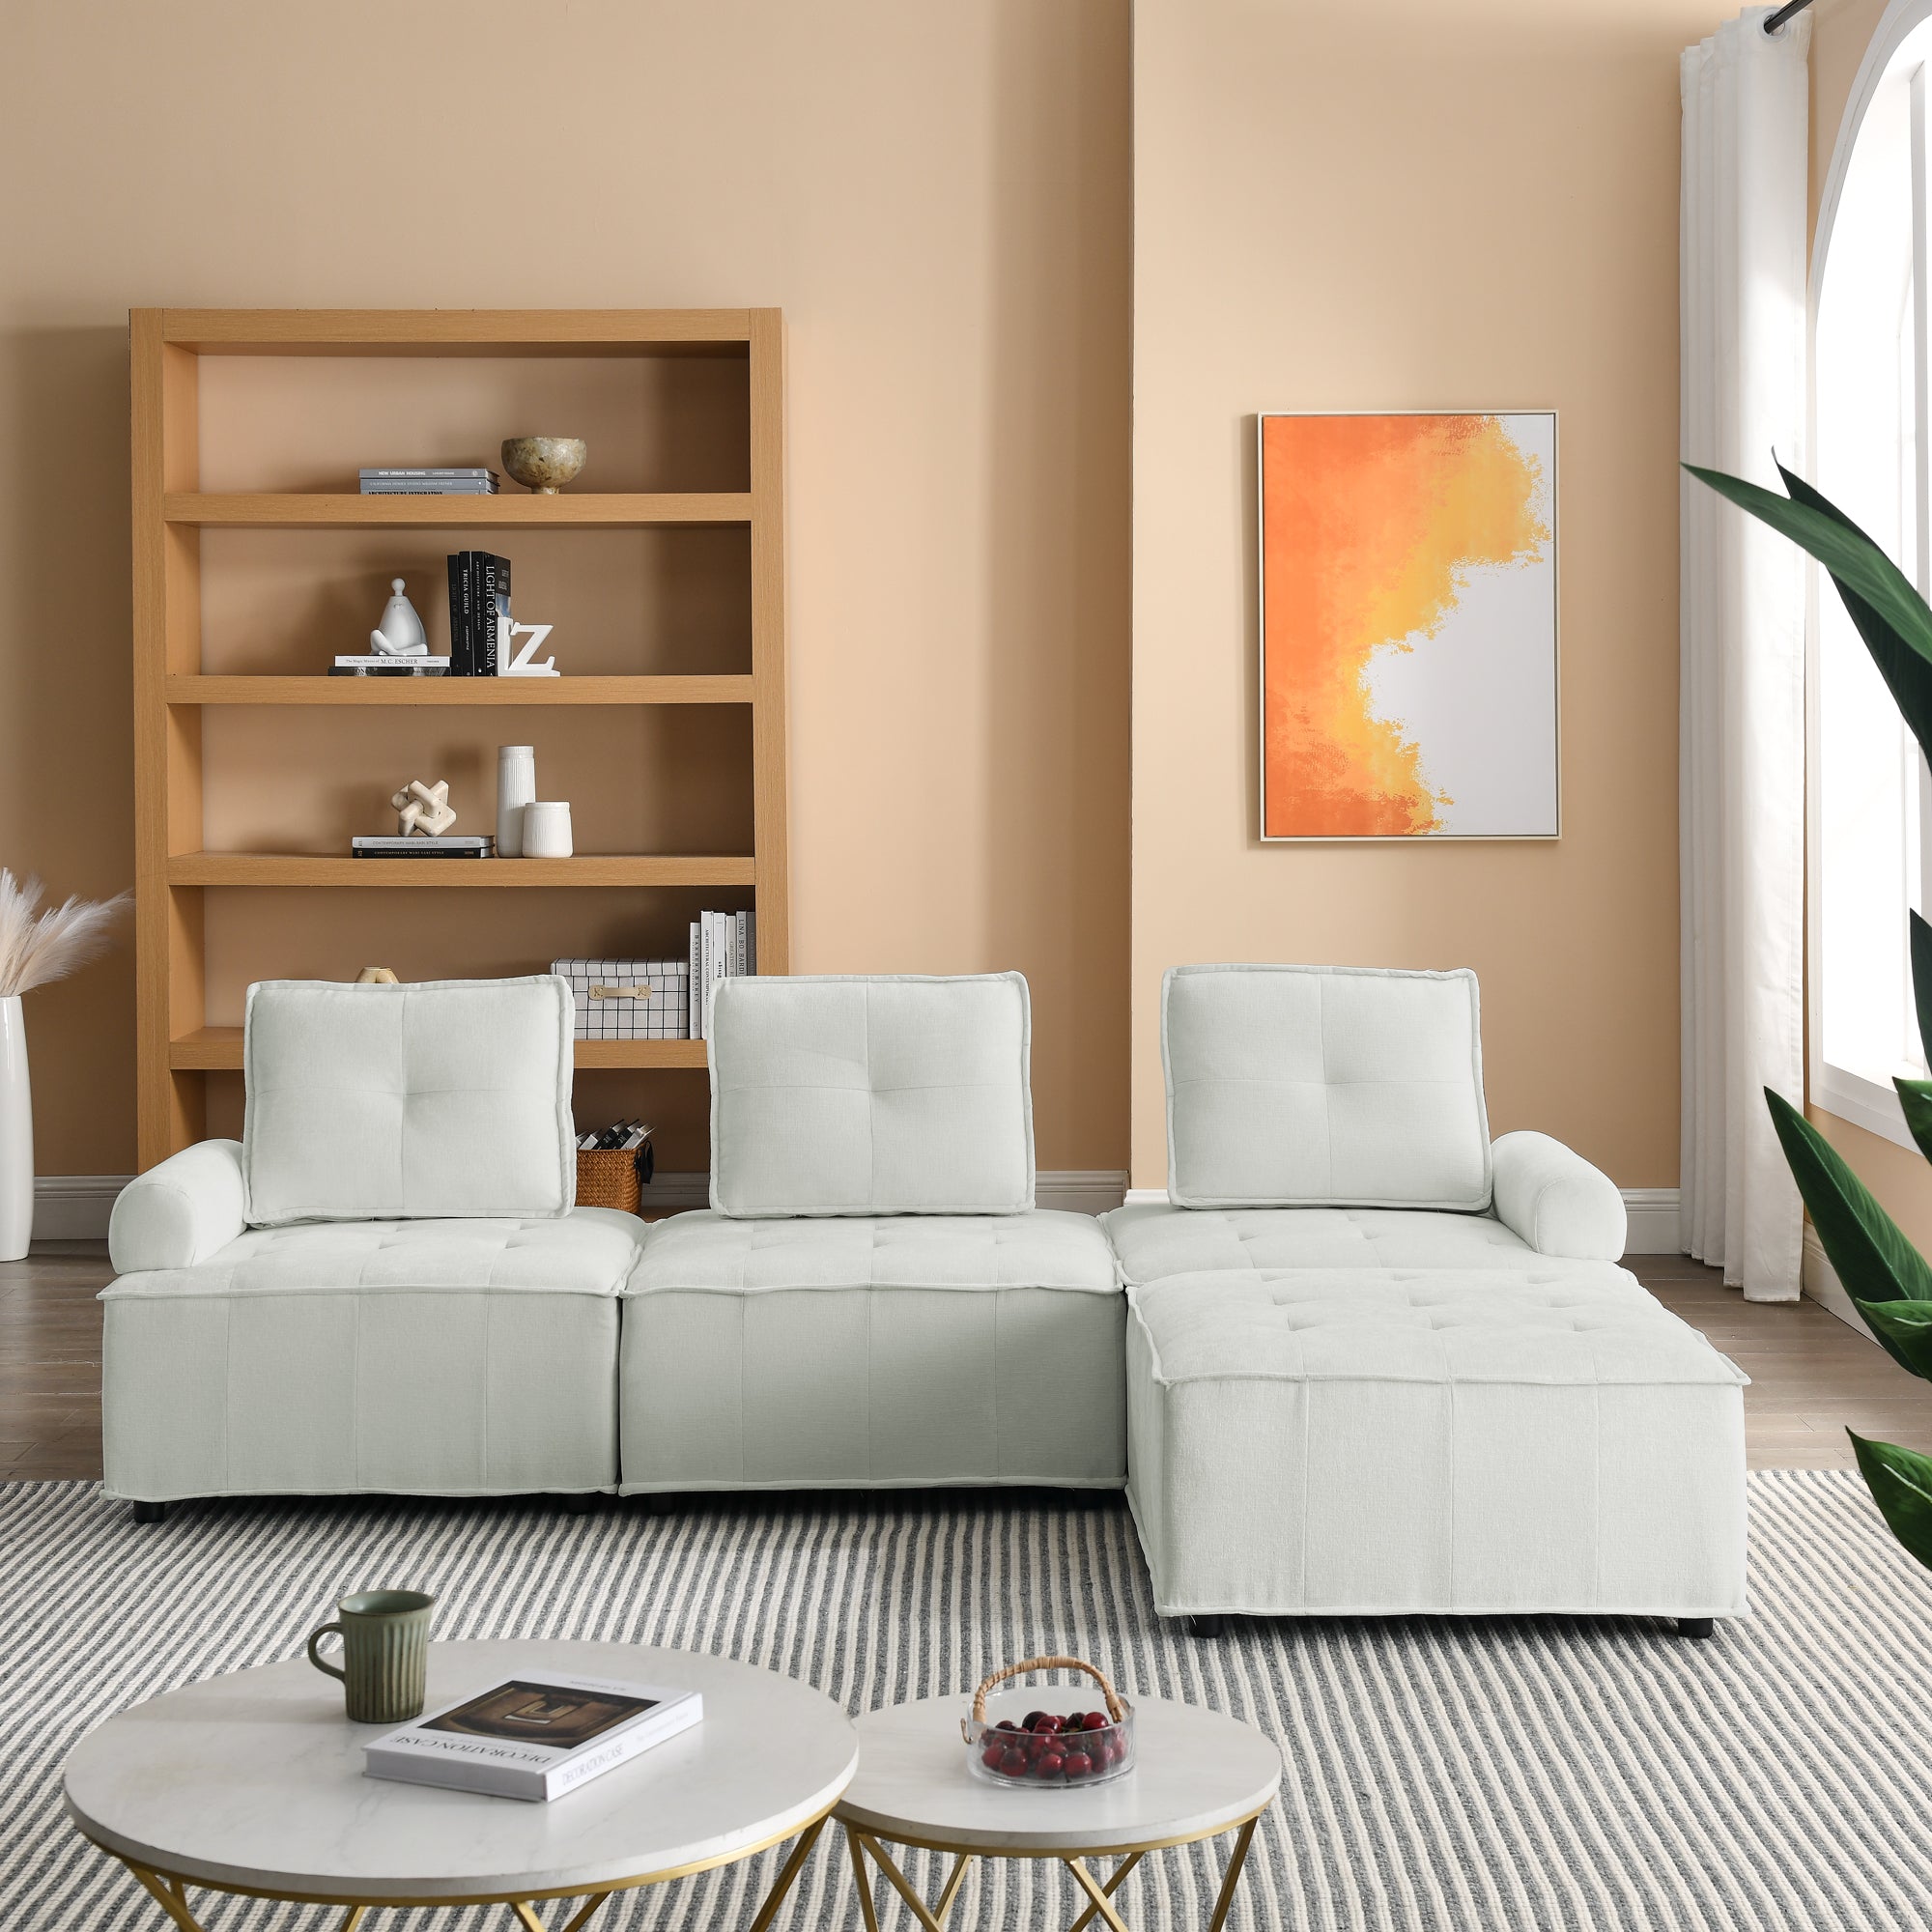 Bellemave 99" L-Shape Modular Sectional Sofa, DIY Combination